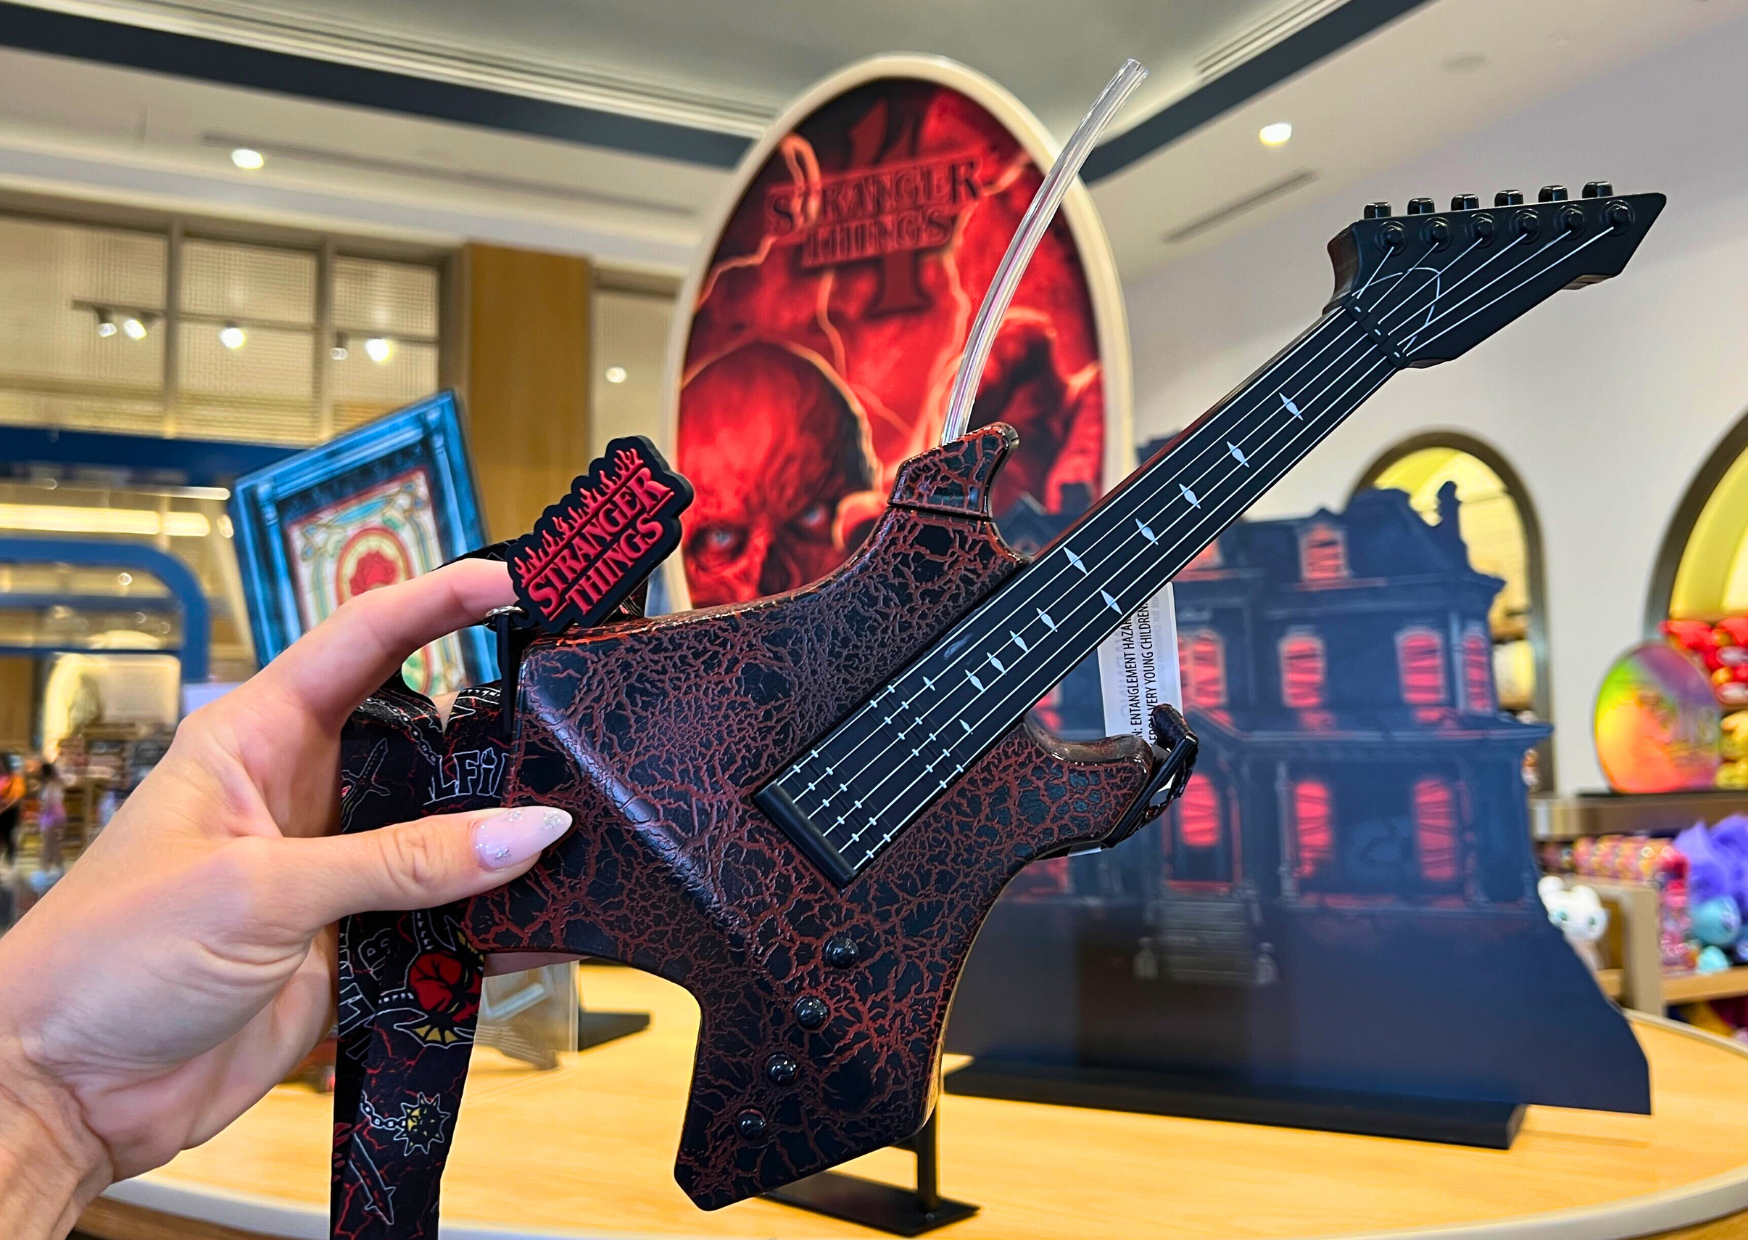 New 'Stranger Things' Eddie Munson Guitar Sipper at Universal Orlando  Resort - WDW News Today